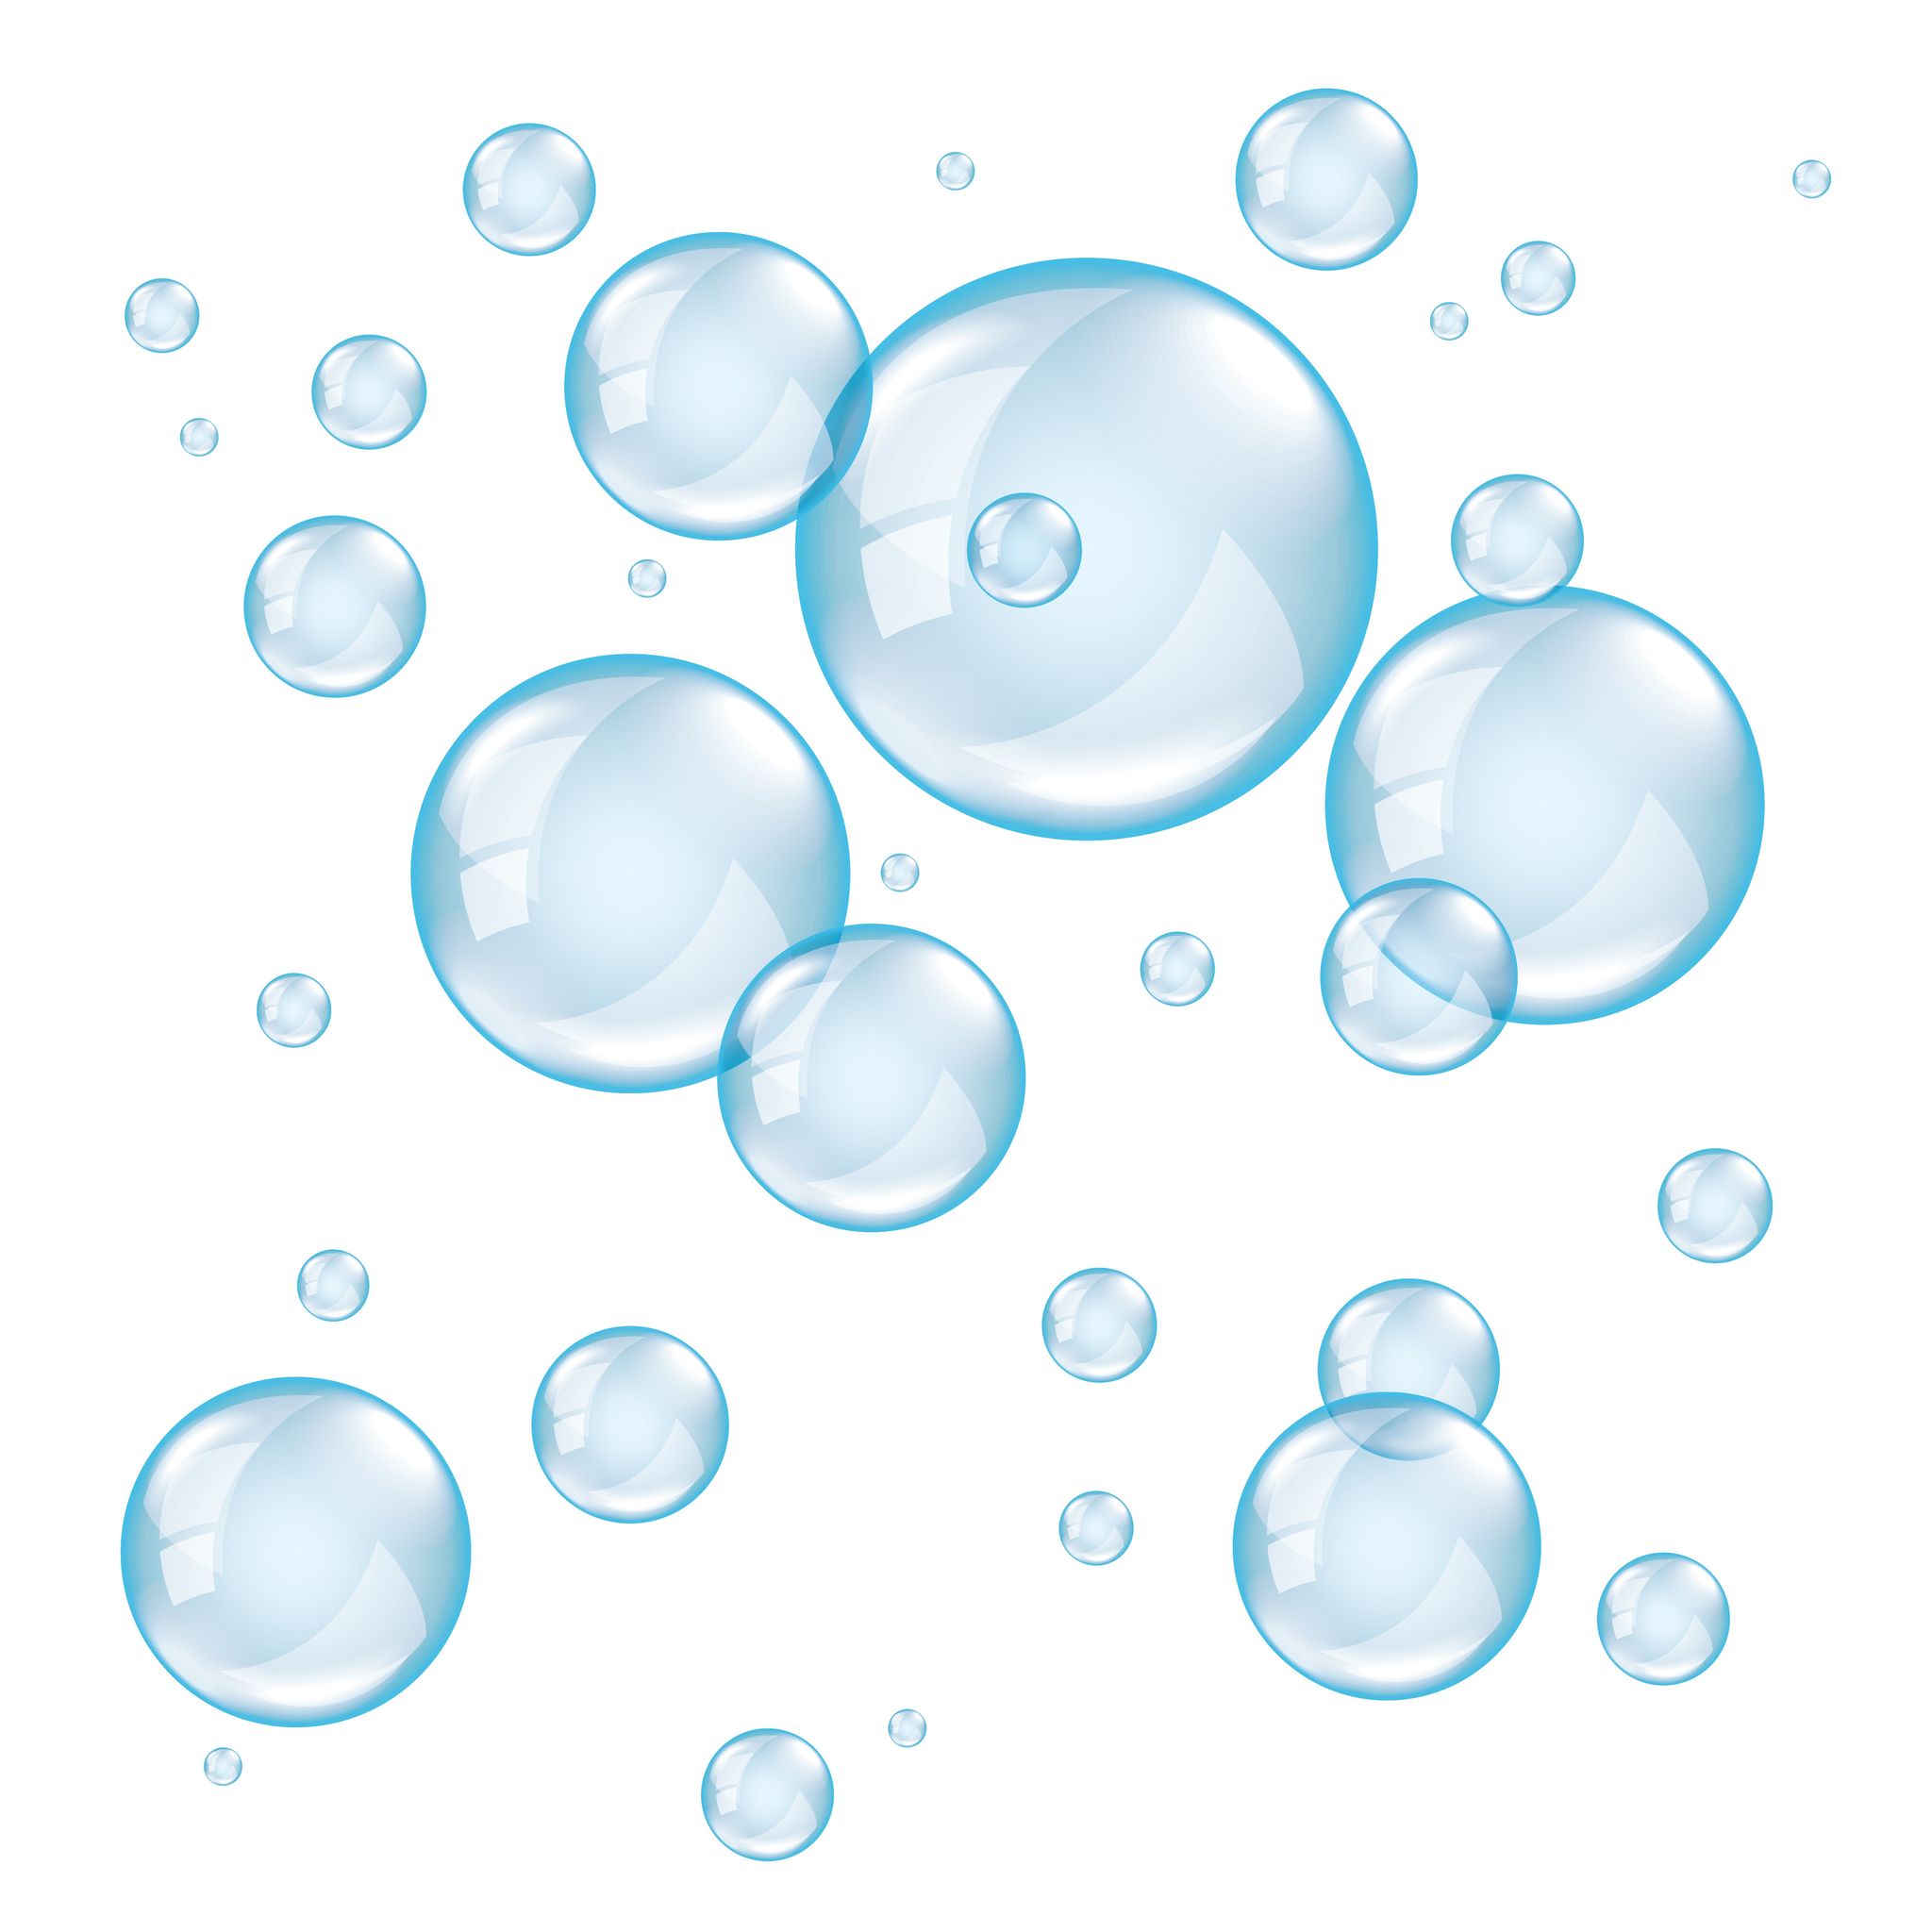 22075706 - transparent soap bubbles on white background photo realistic ...